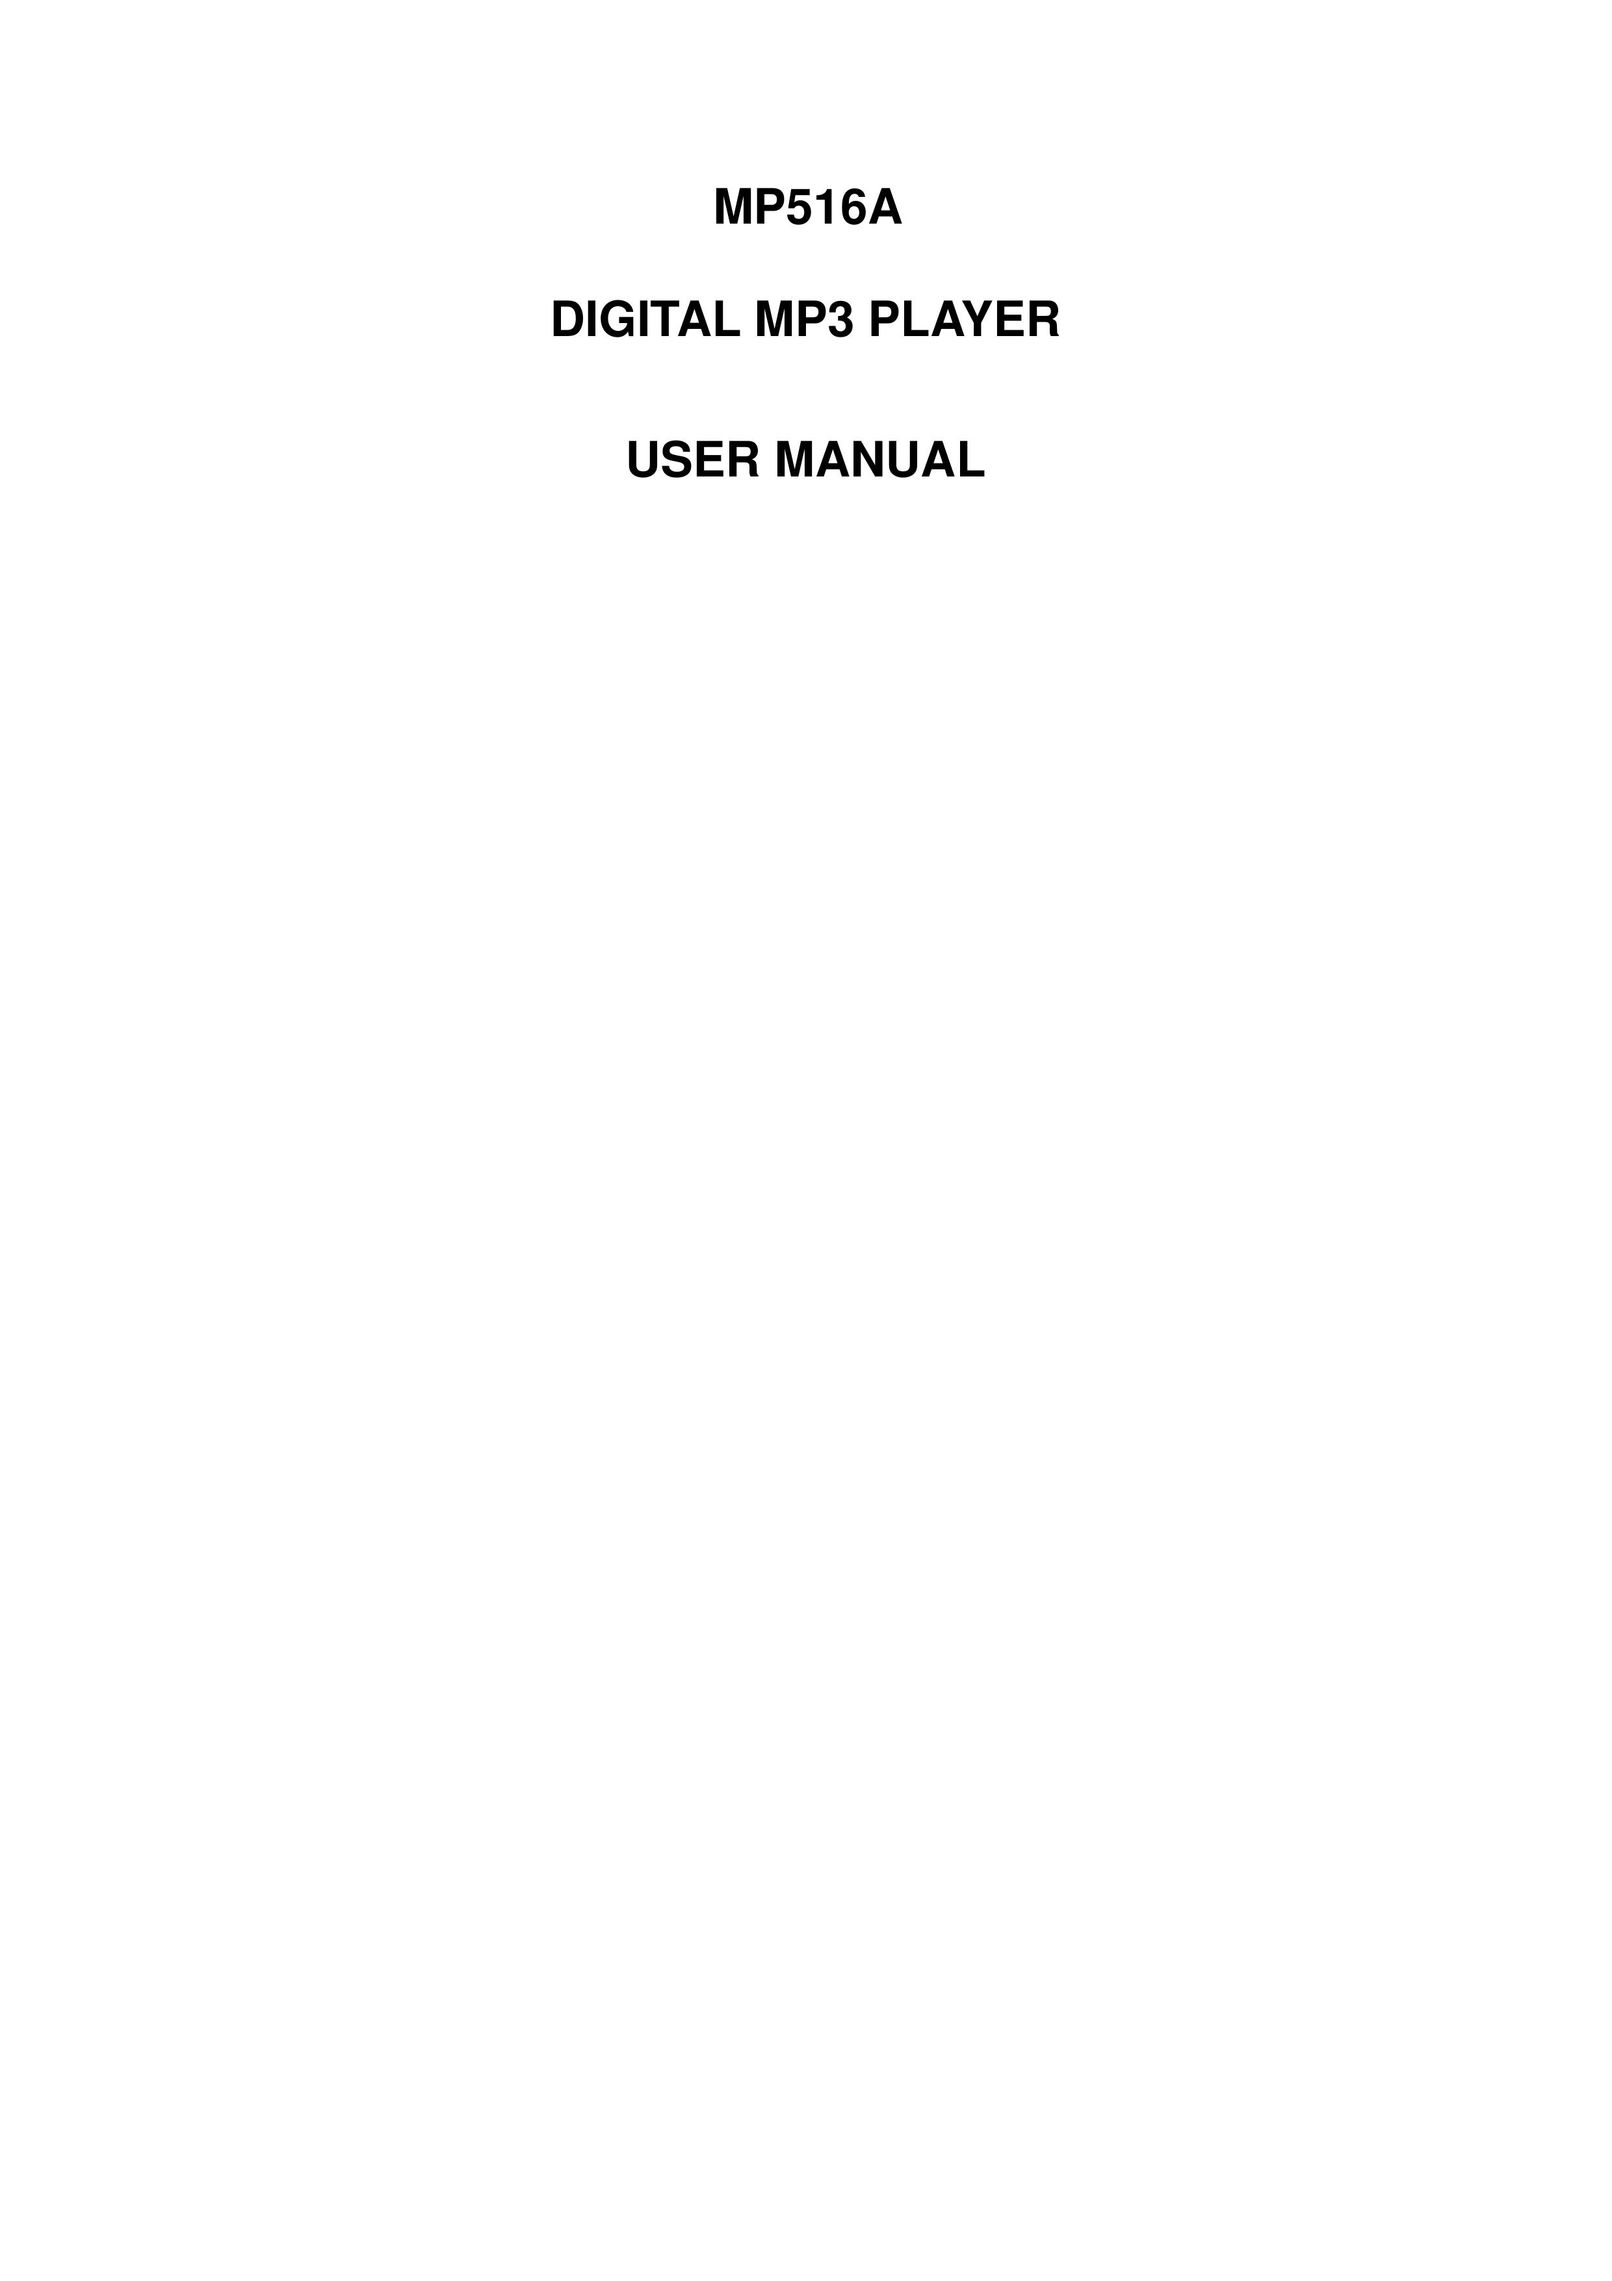 Emprex MP516A MP3 Player User Manual